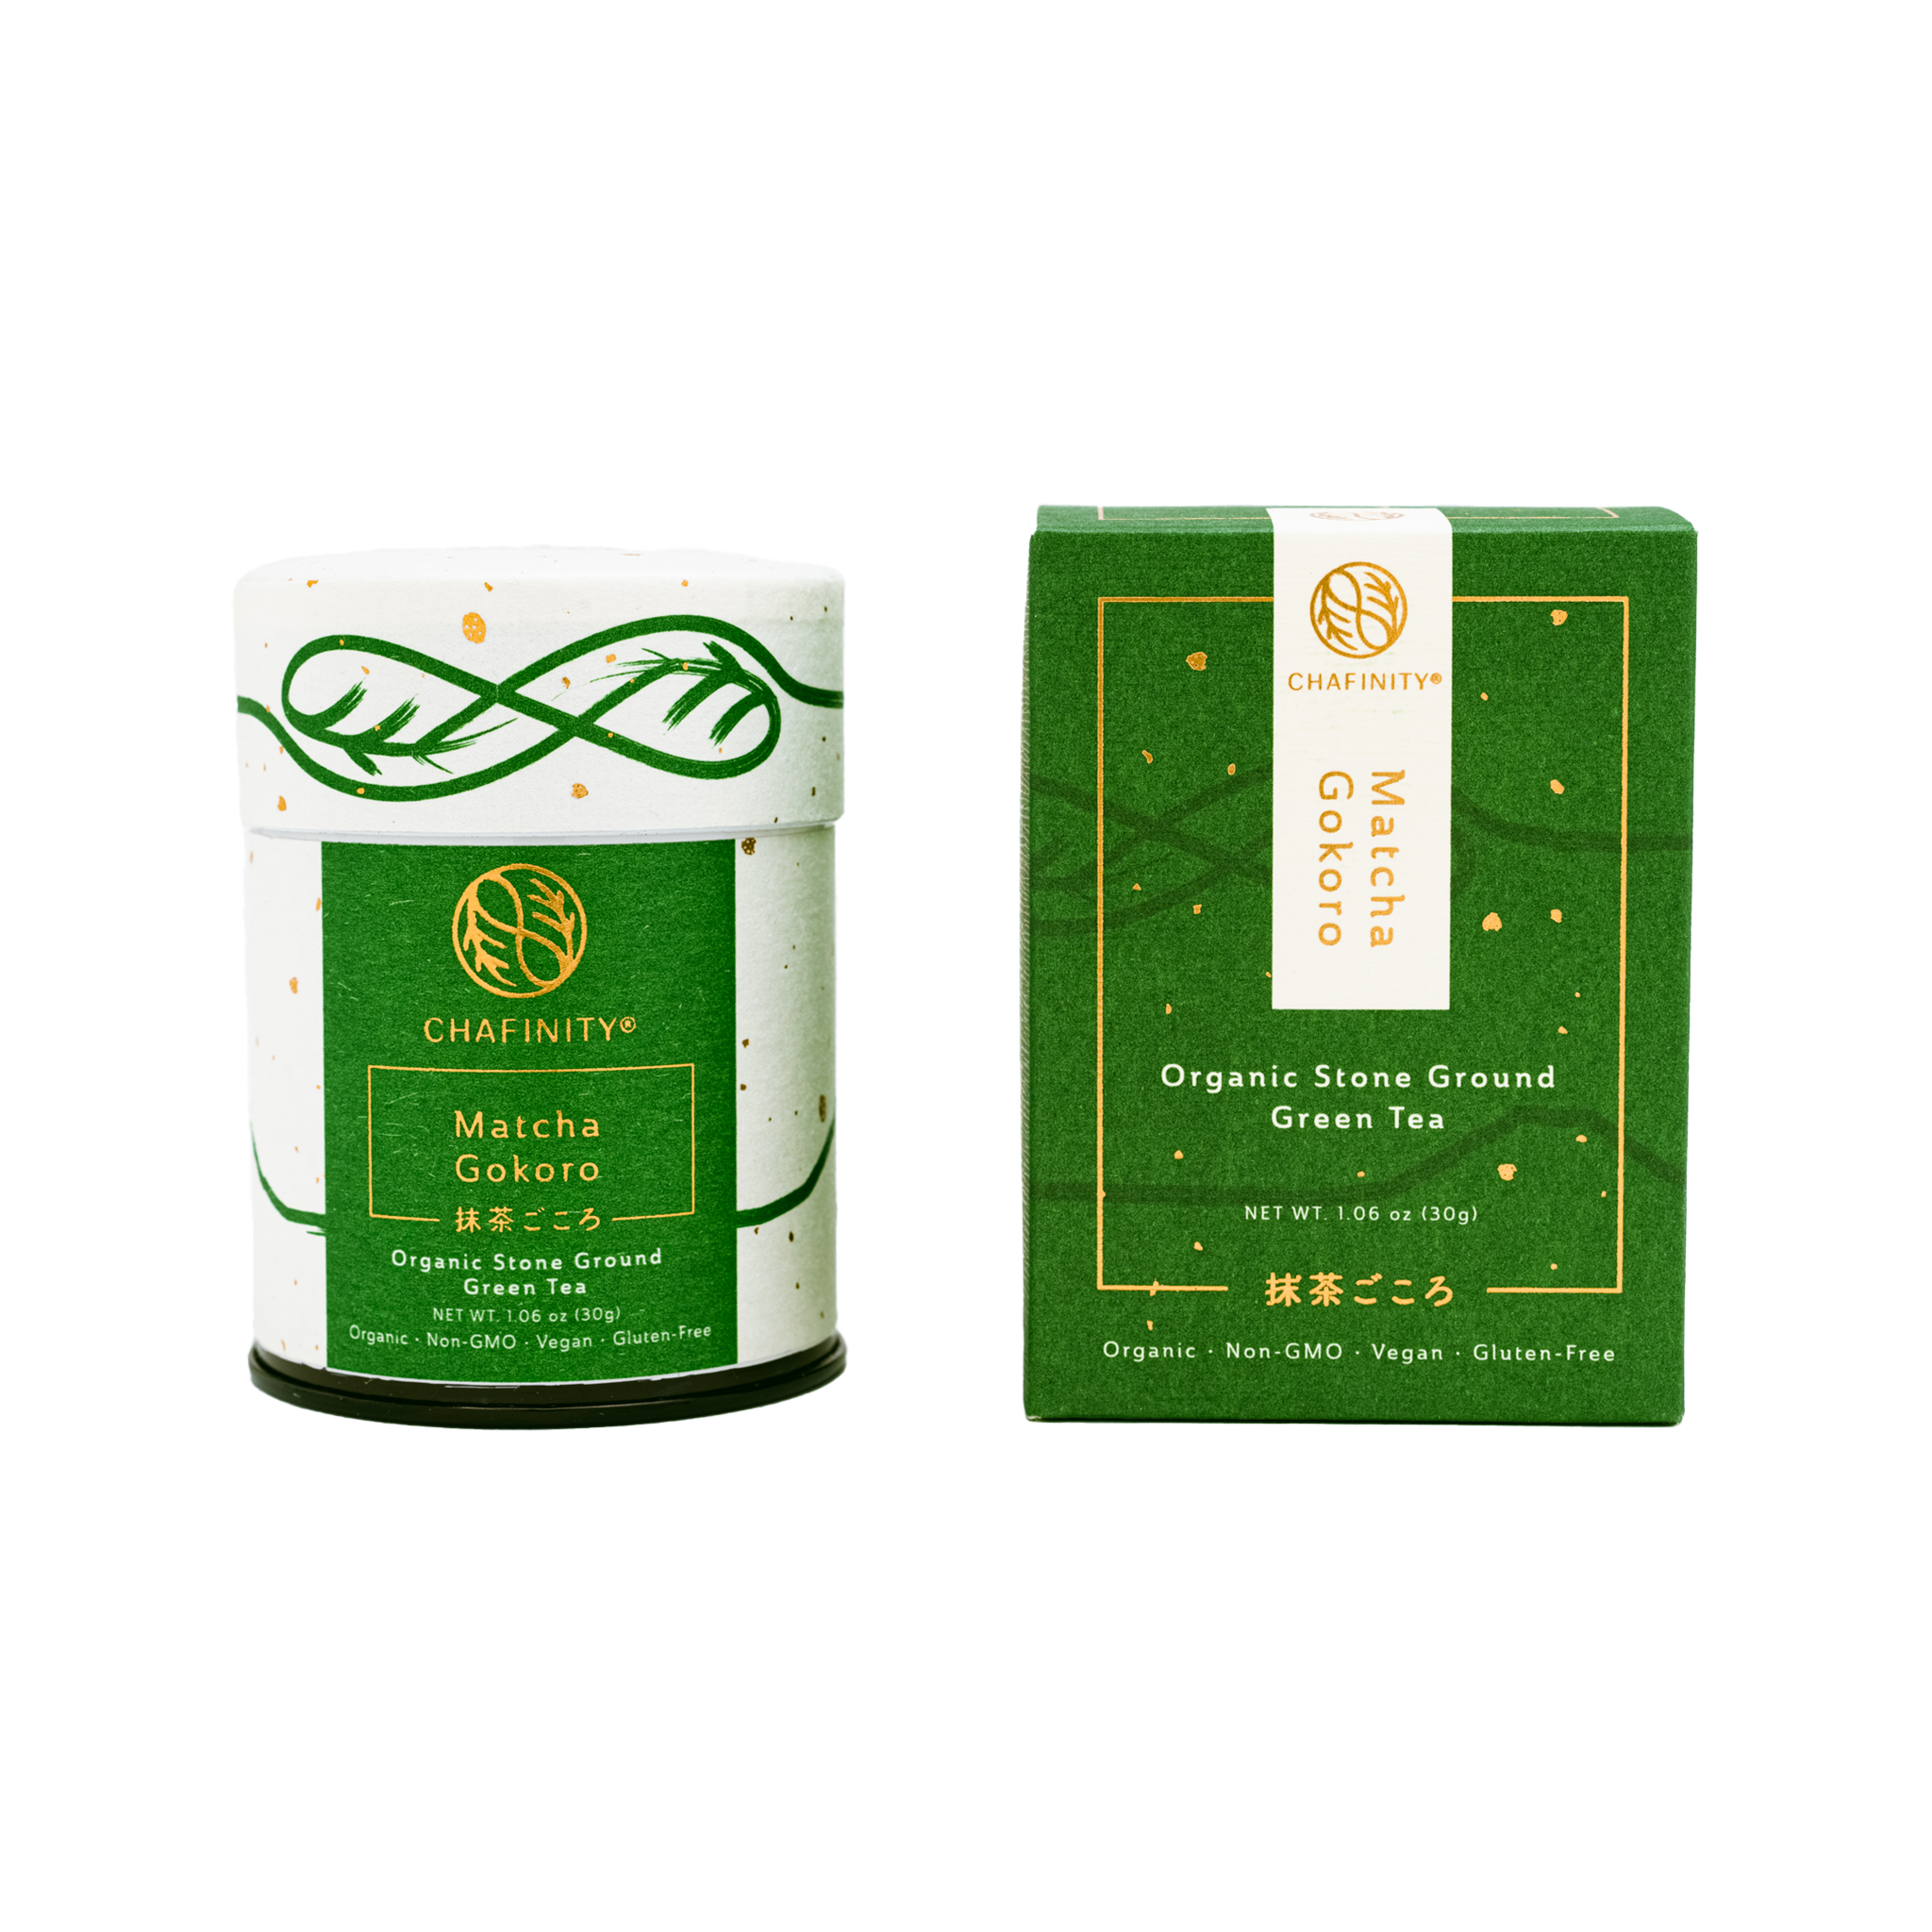  Organic Matcha Green Tea Gift Set : Grocery & Gourmet Food